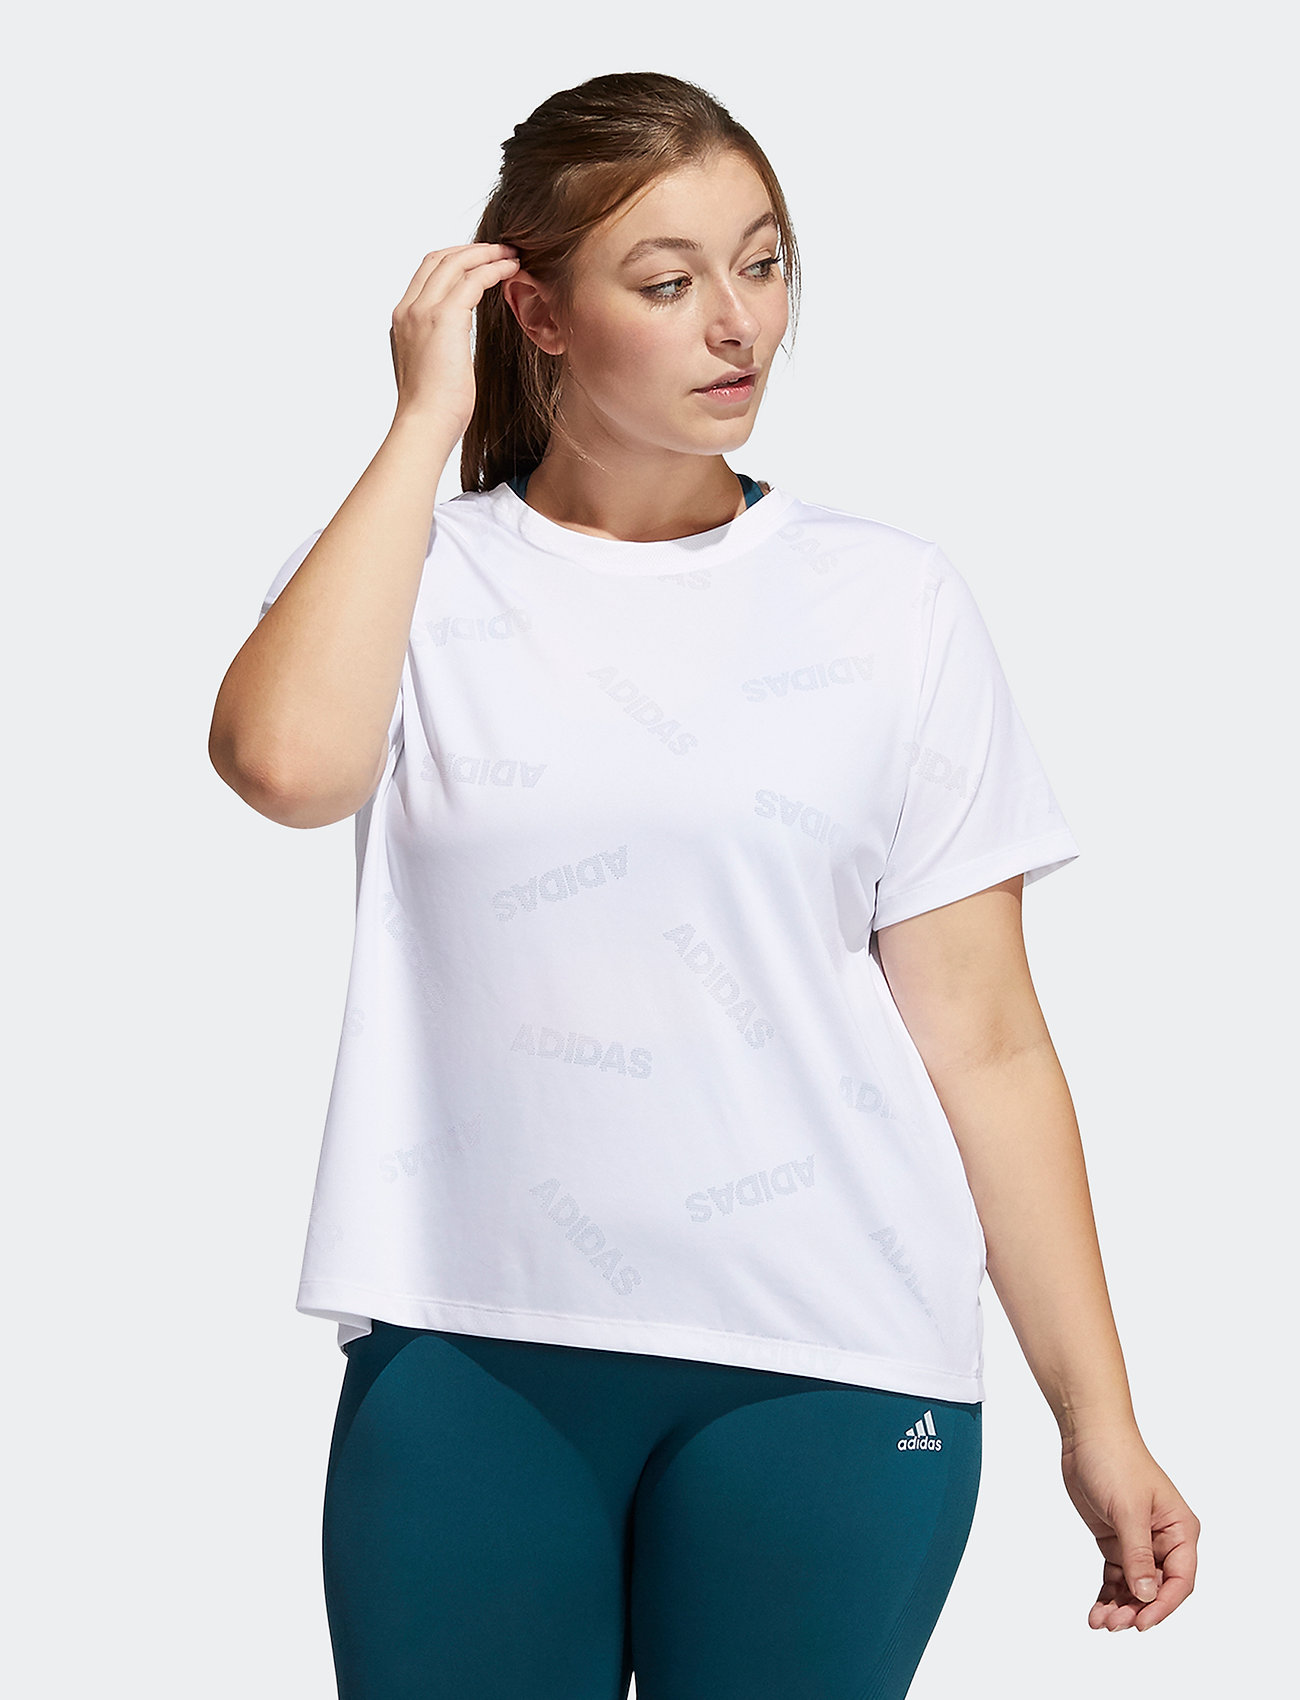 underjordisk smække skovl adidas Performance Training Aeroknit T-shirt W (plus Size) - T-shirts |  Boozt.com